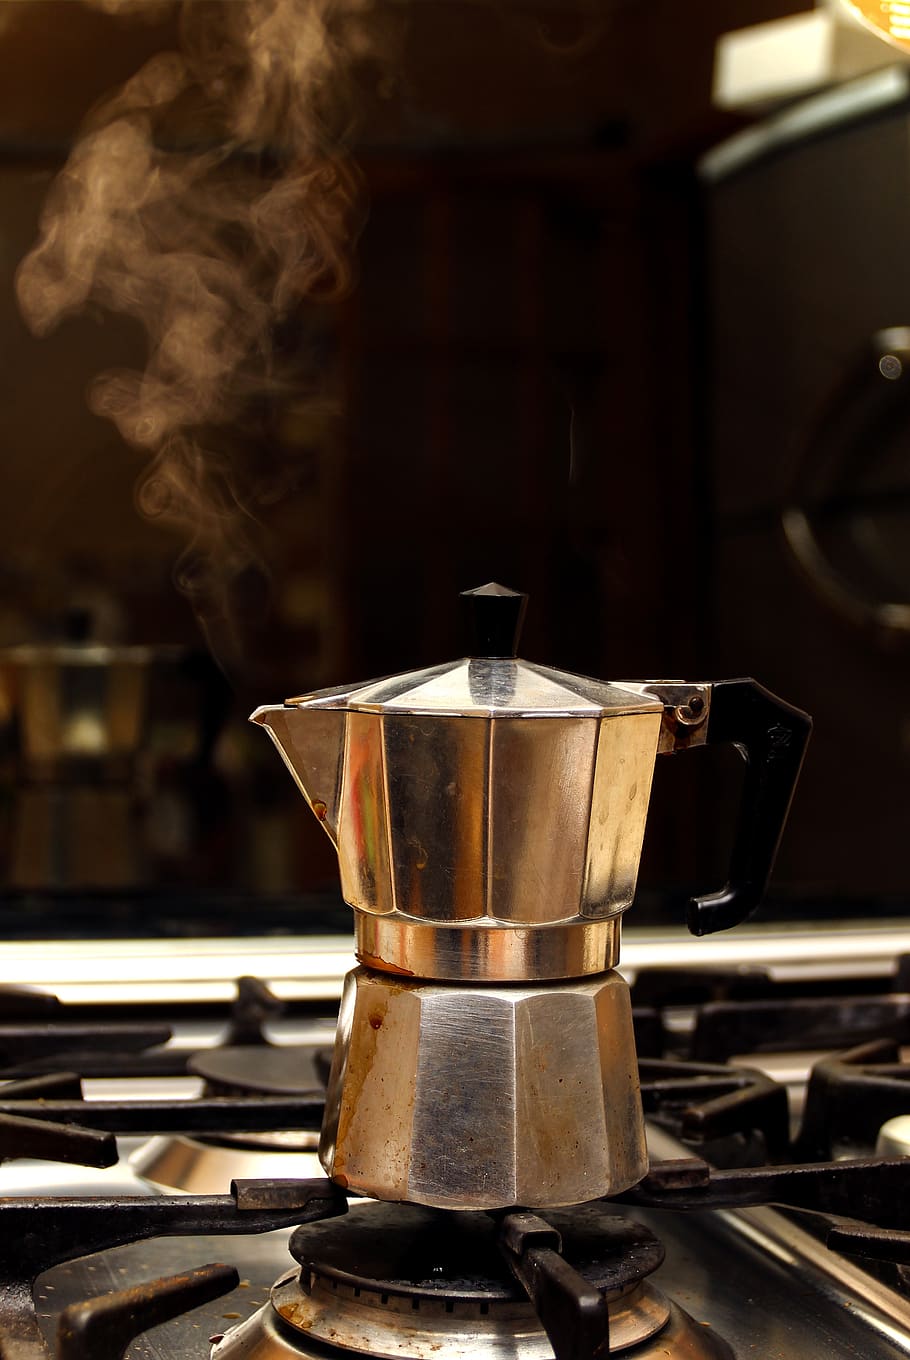 pembuat kopi, kopi, dapur, kompor, panas, gambar, alat, makanan dan minuman, suhu panas, pembakar - kompor